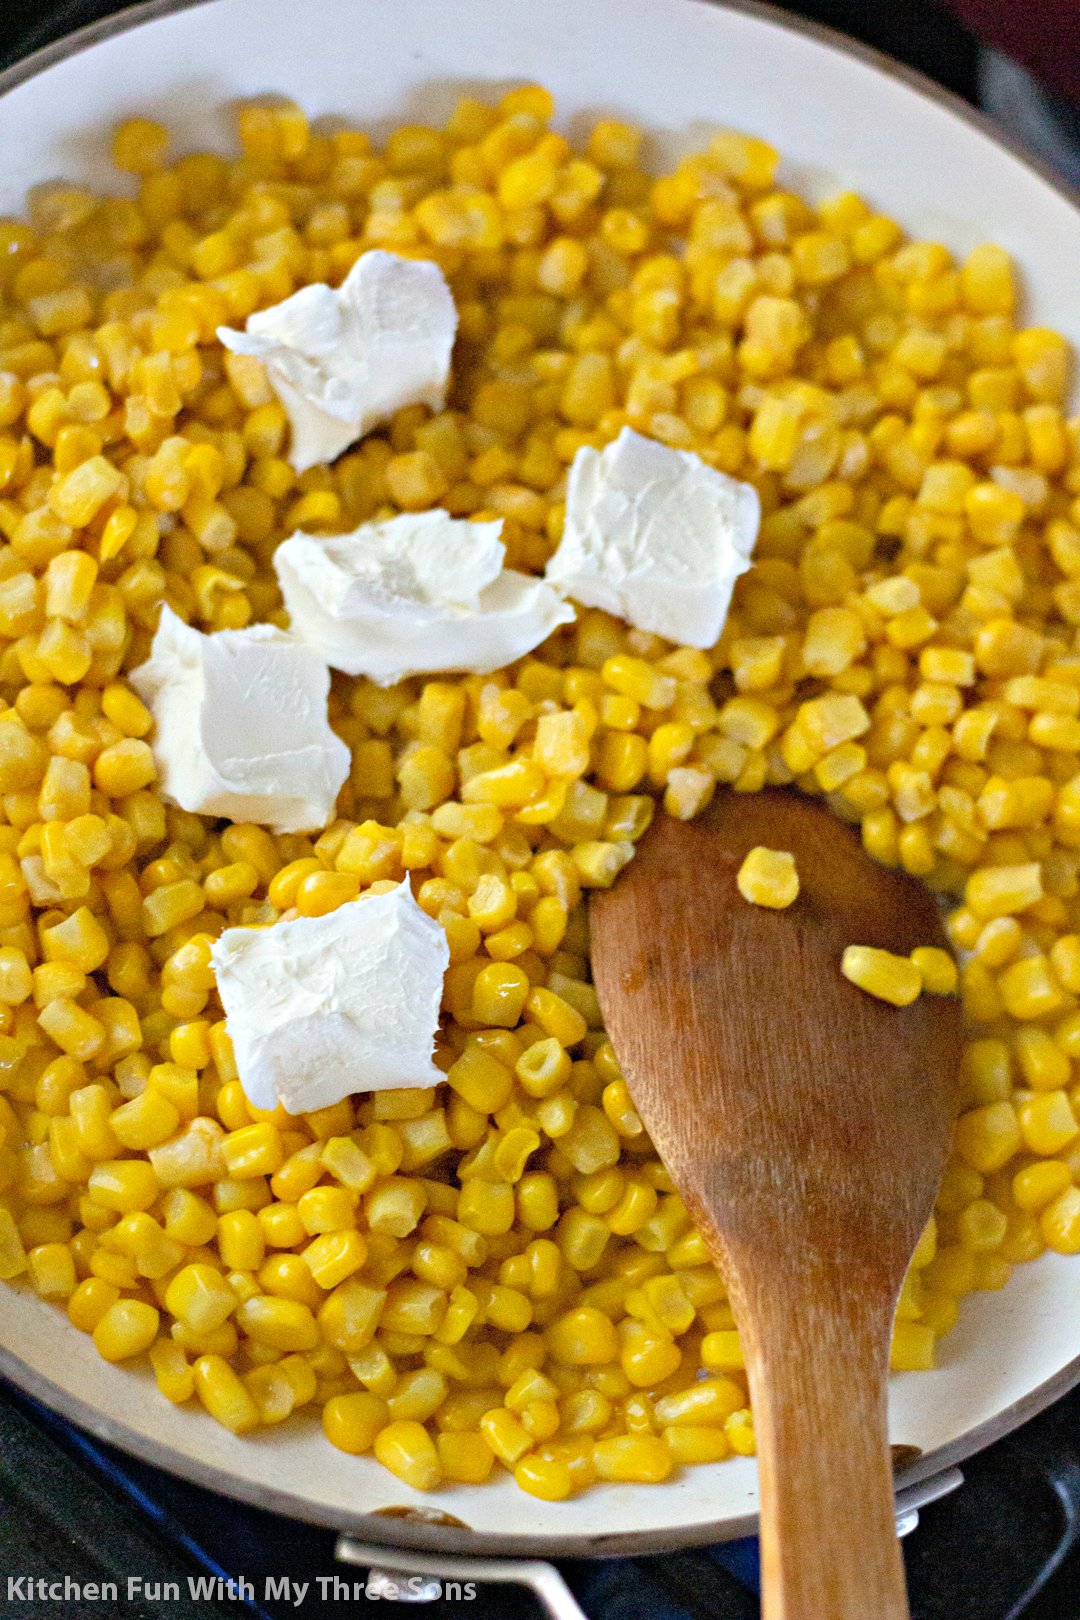 melting cream cheese into the corn